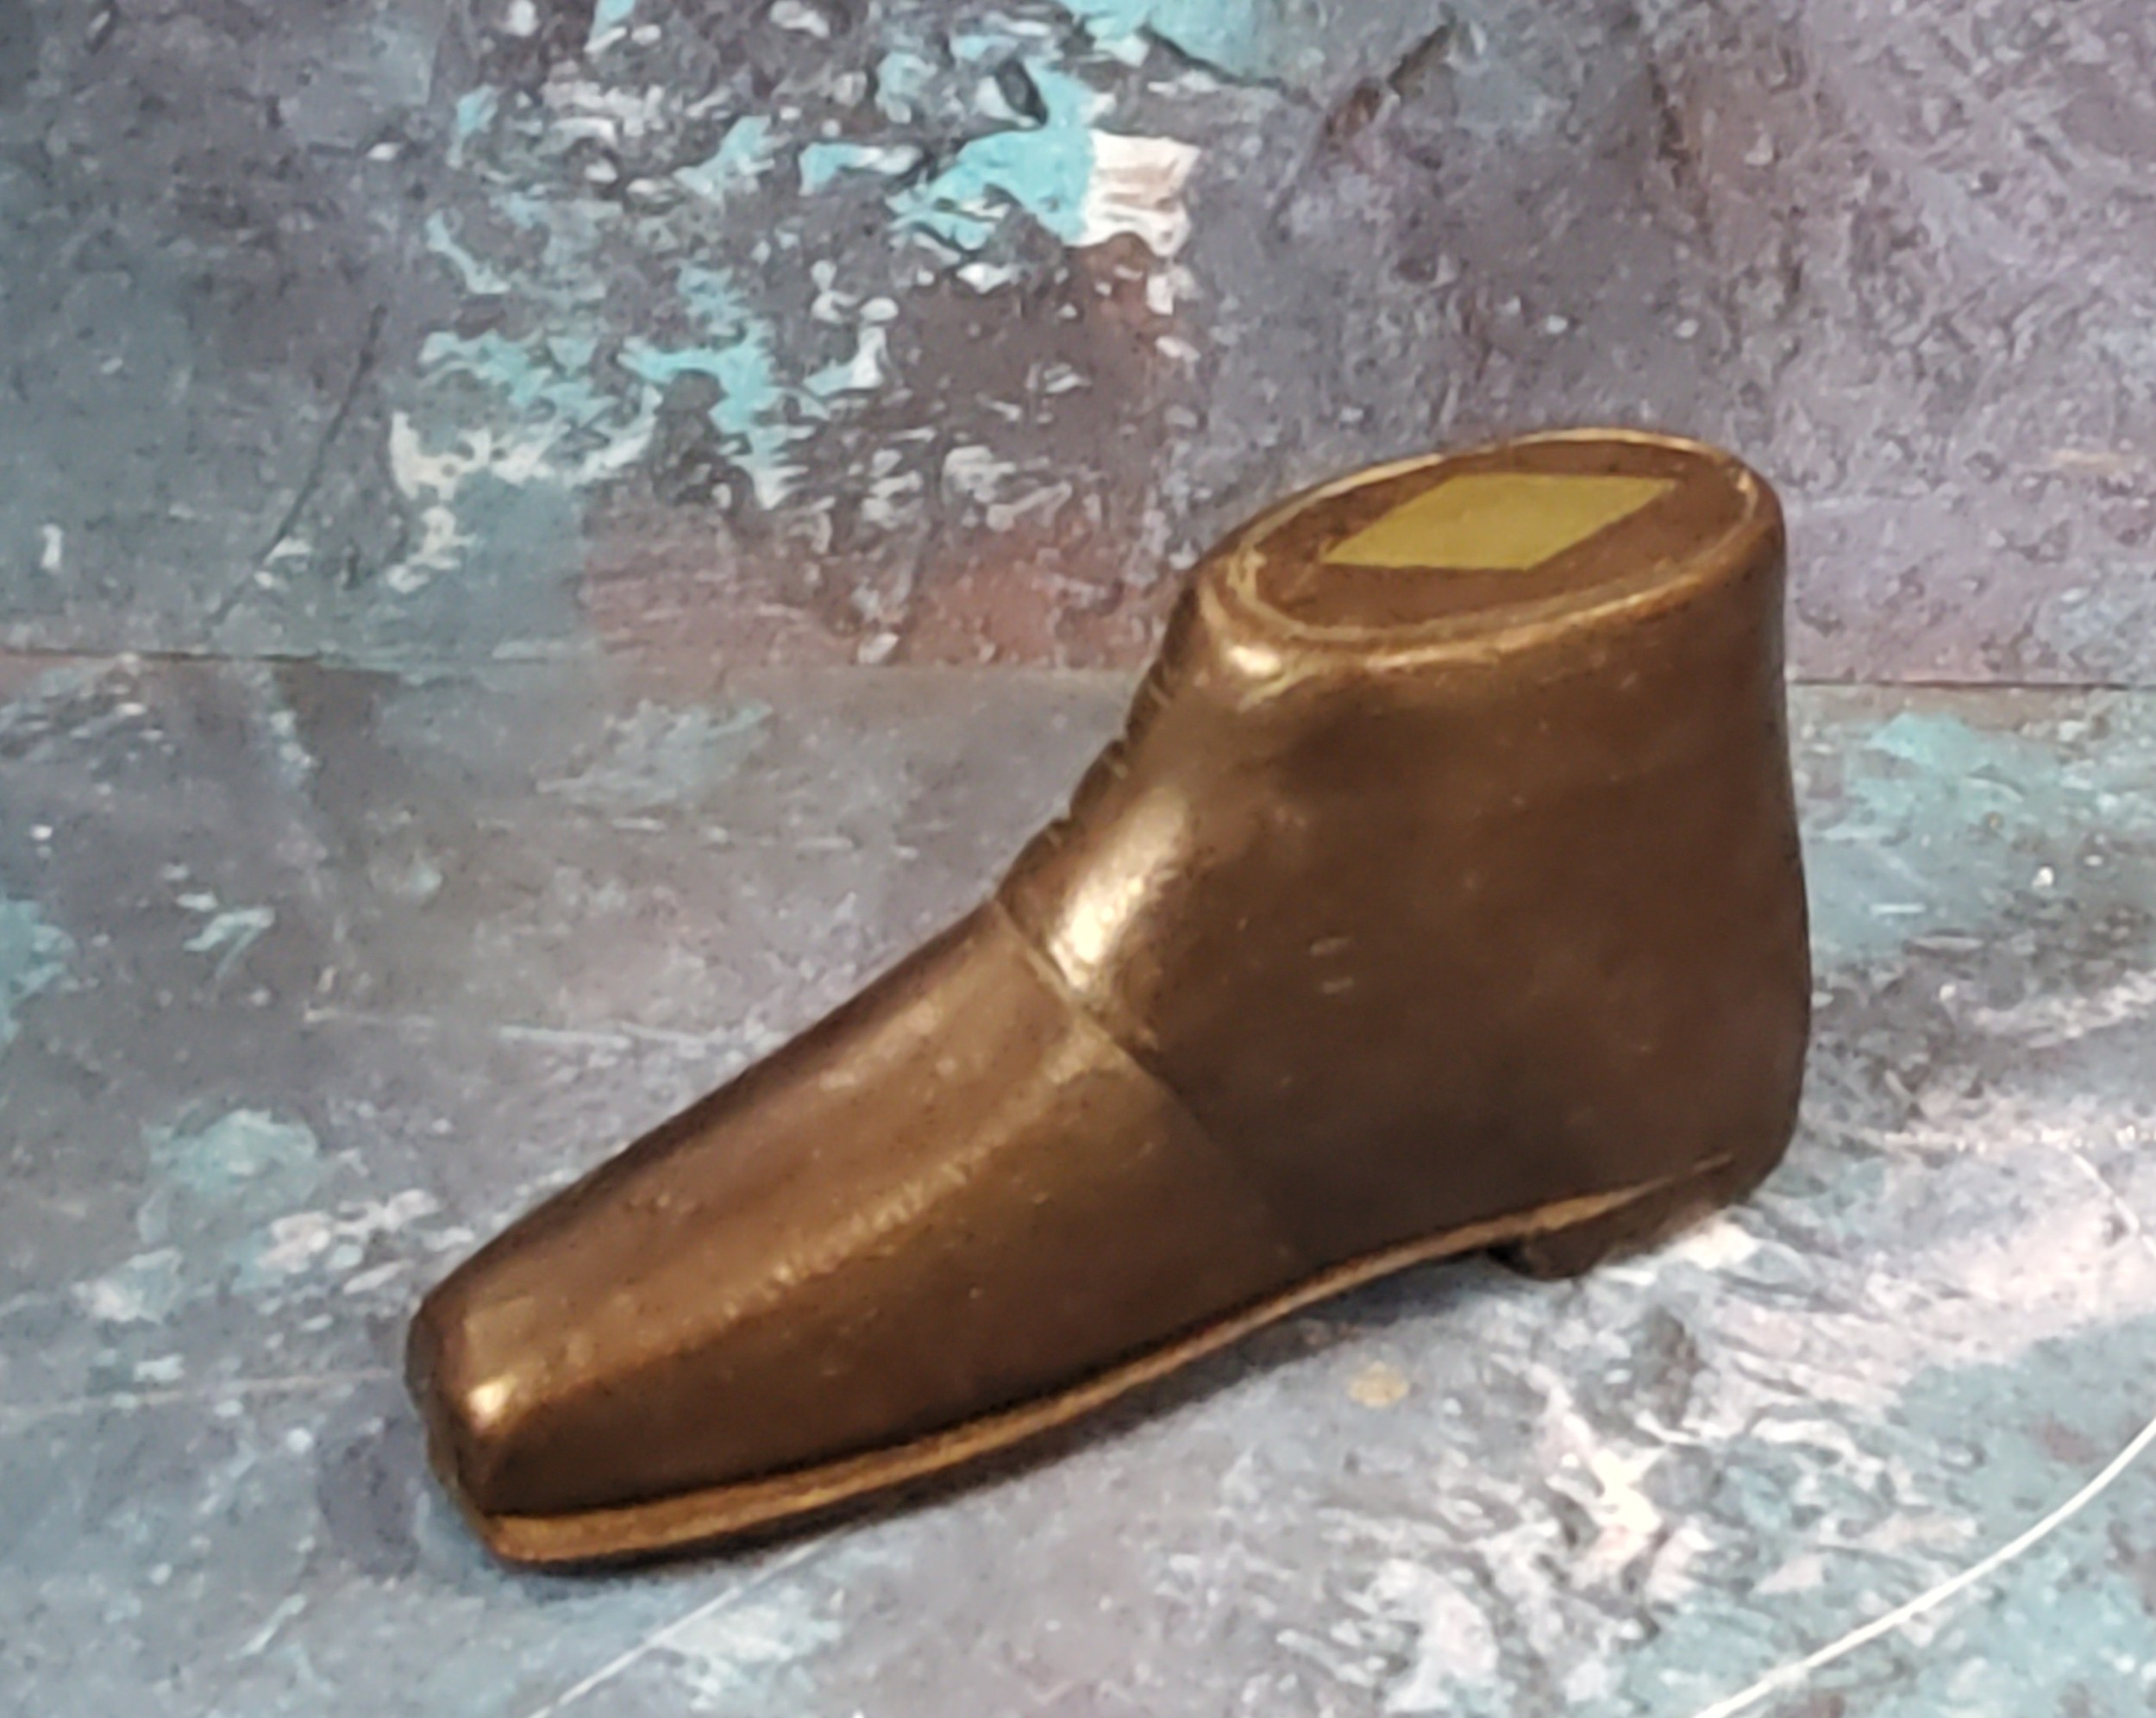 A George III novelty snuff shoe, 8.5cm long, c.1800